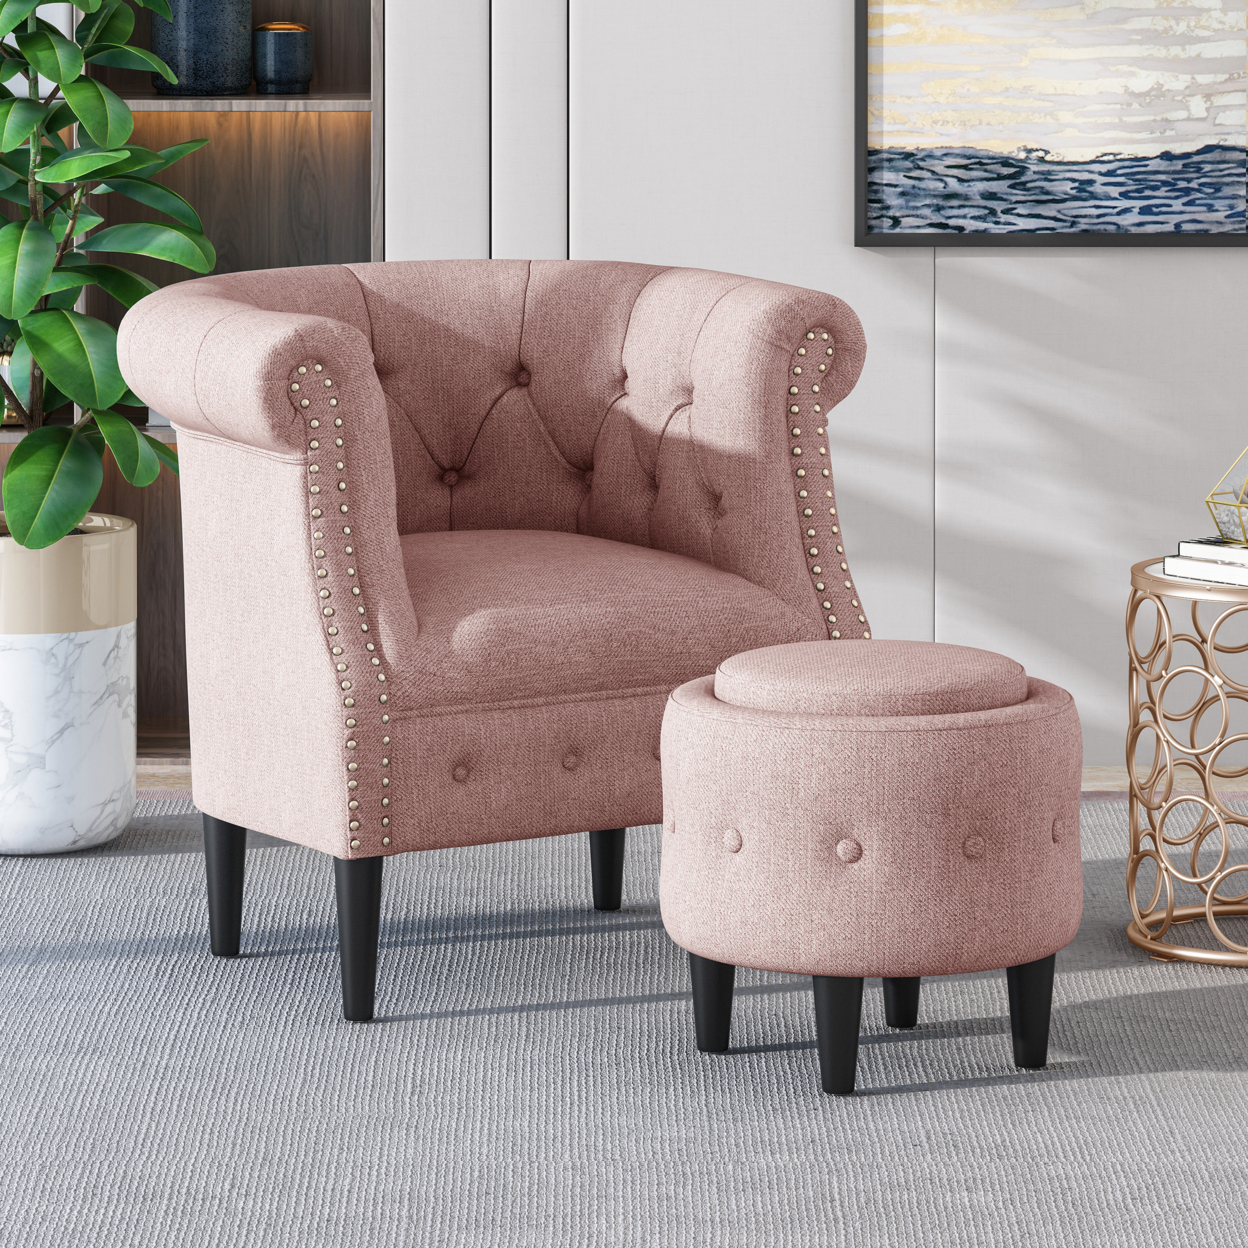 Leila Petite Tufted Fabric Chair And Ottoman Set - Light Blush + Dark Brown